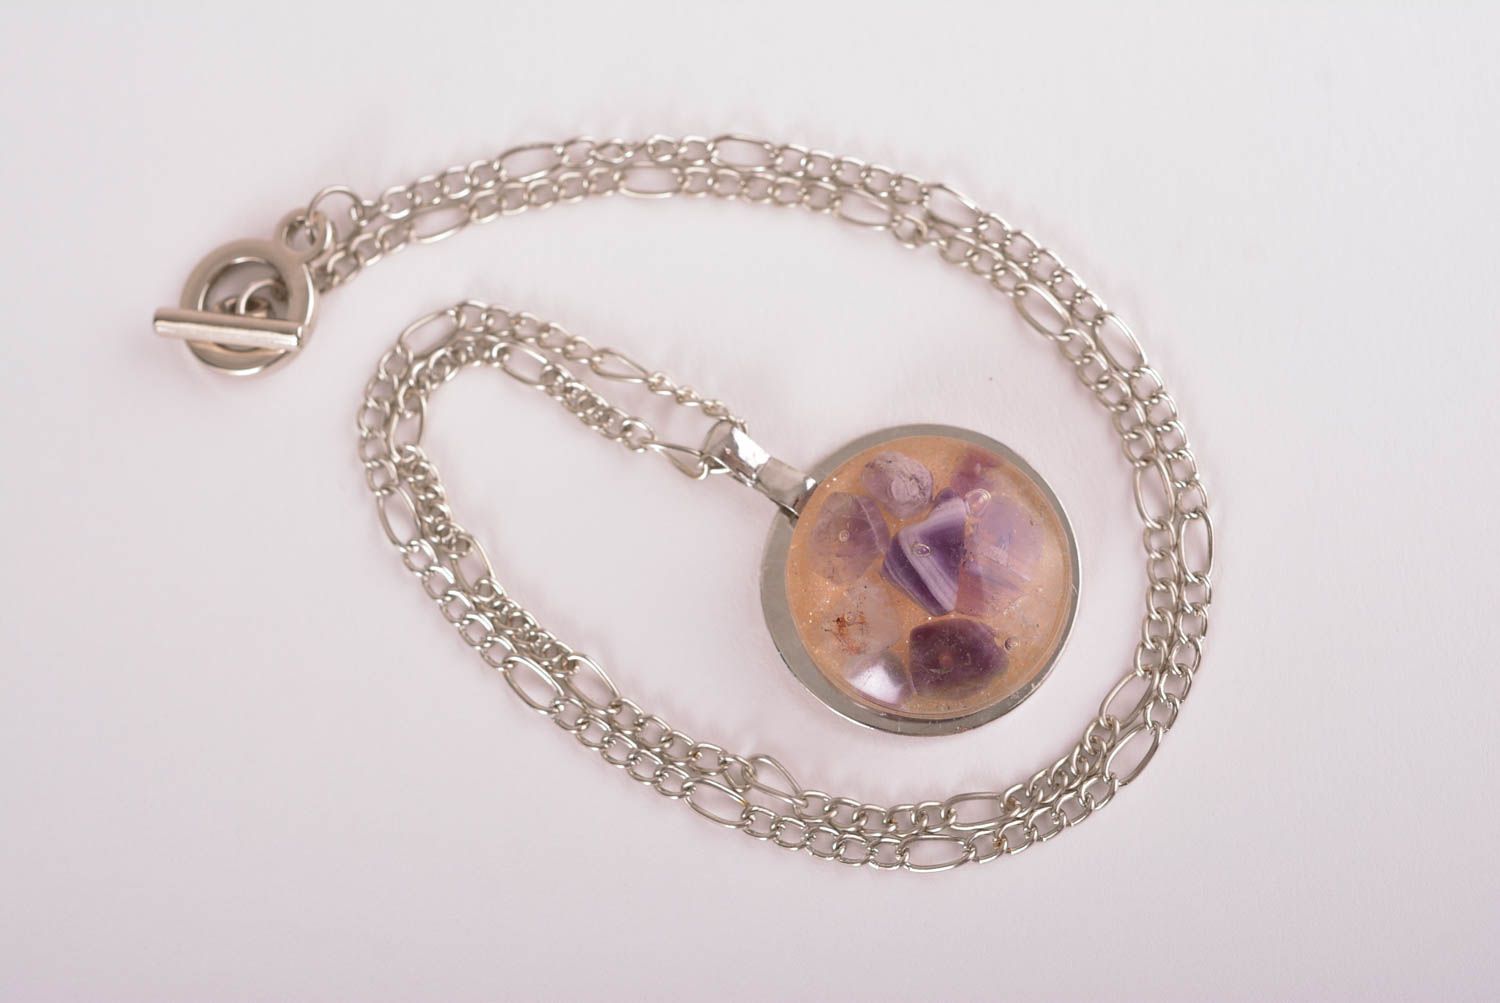 Handmade pendant unusual pendant designer accessory gift ideas epoxy jewelry photo 2